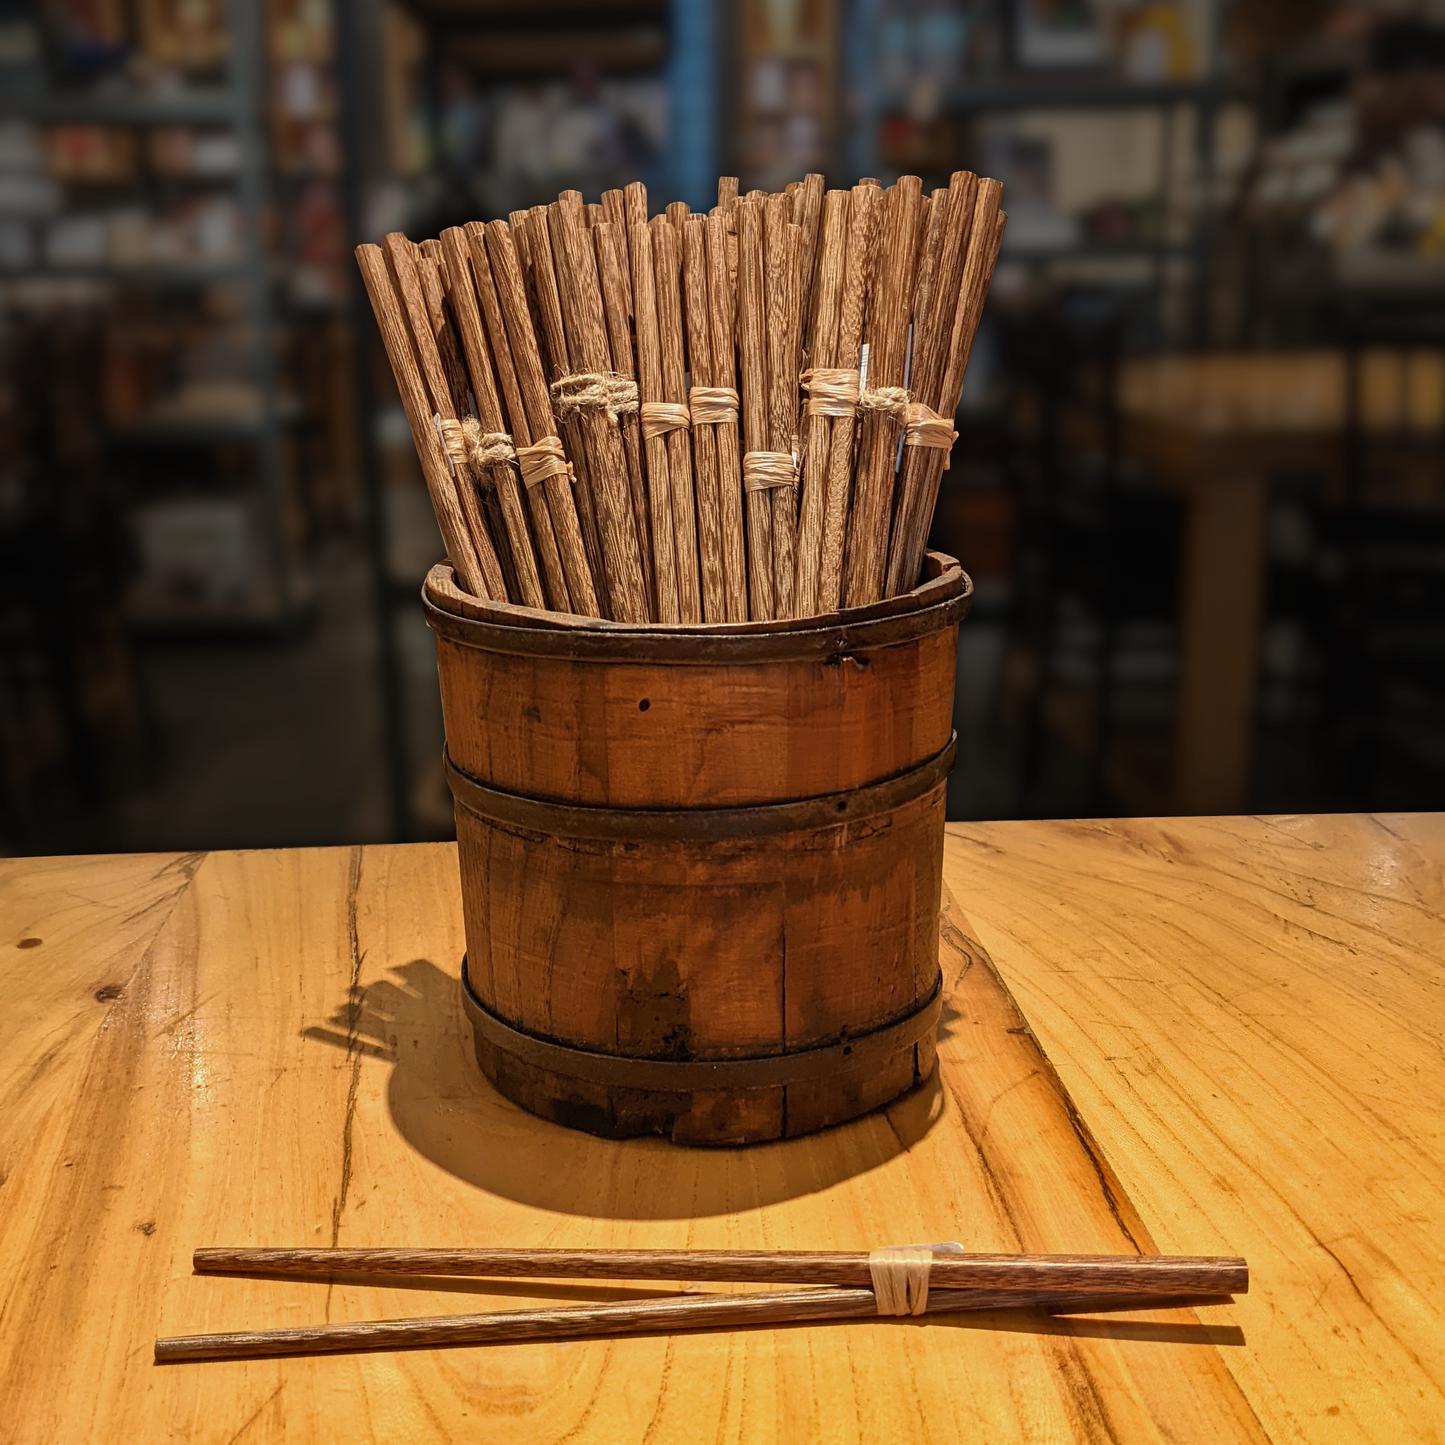 China Live Marketplace Chopsticks